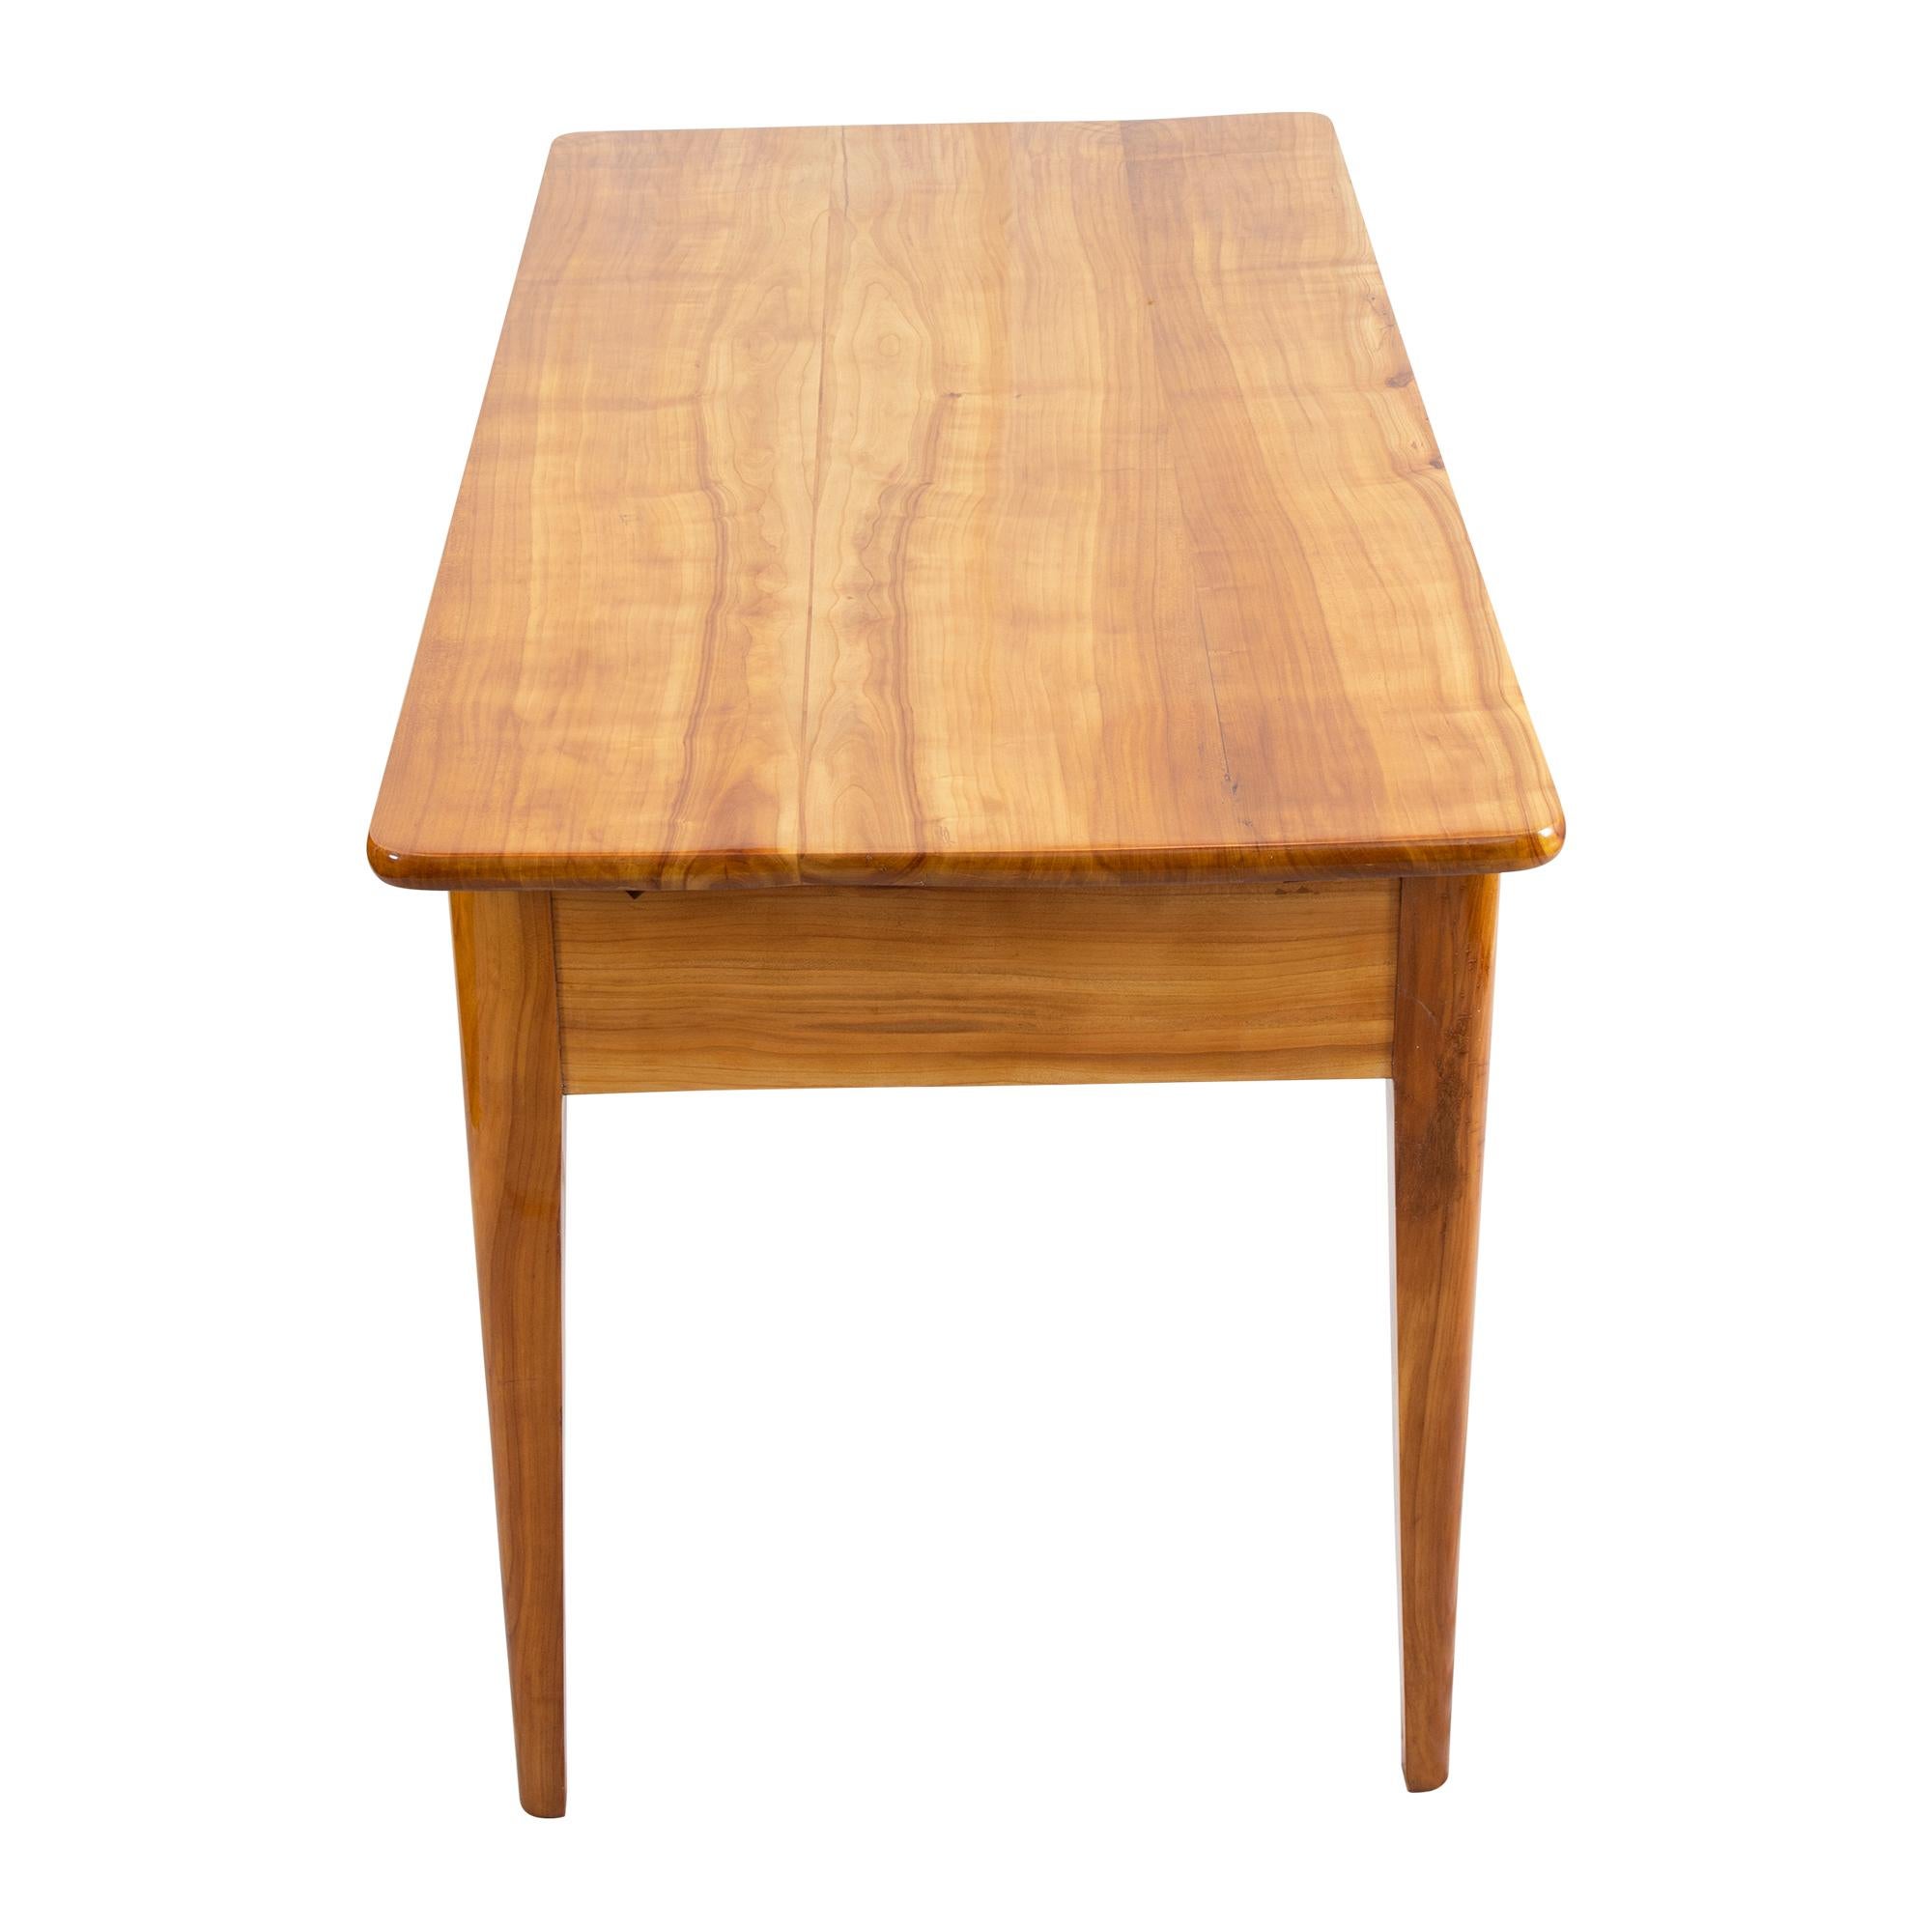 19th Century Biedermeier Solid Cherrywood Table In Good Condition For Sale In Darmstadt, DE